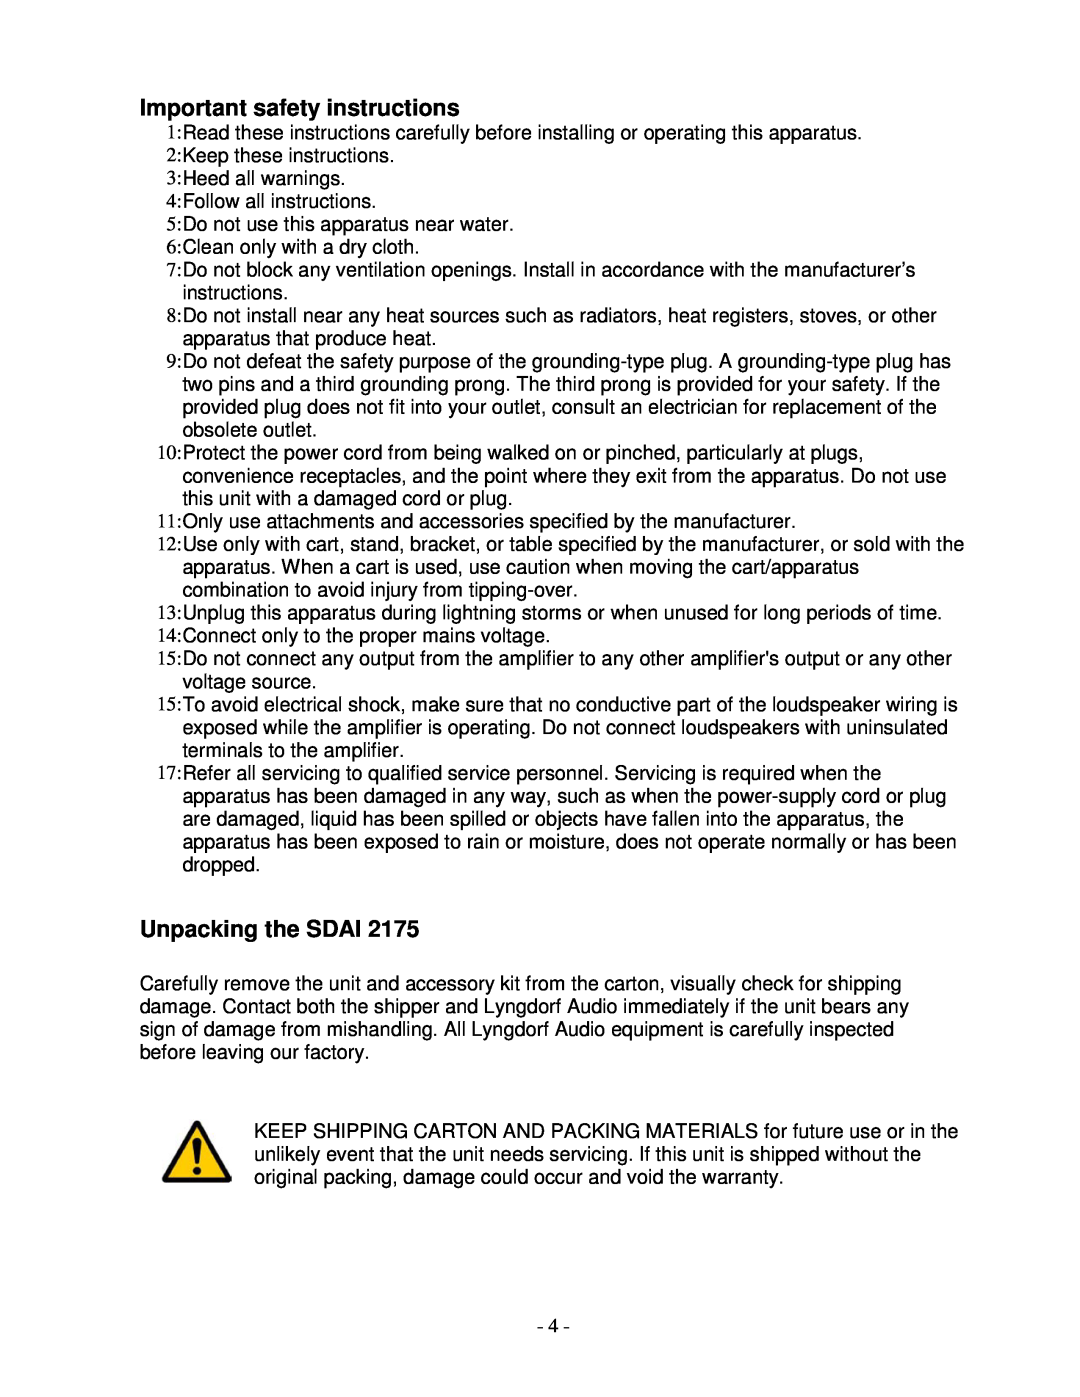 Lyngdorf Audio SDAI 2175 owner manual Important safety instructions, Unpacking the SDAI 